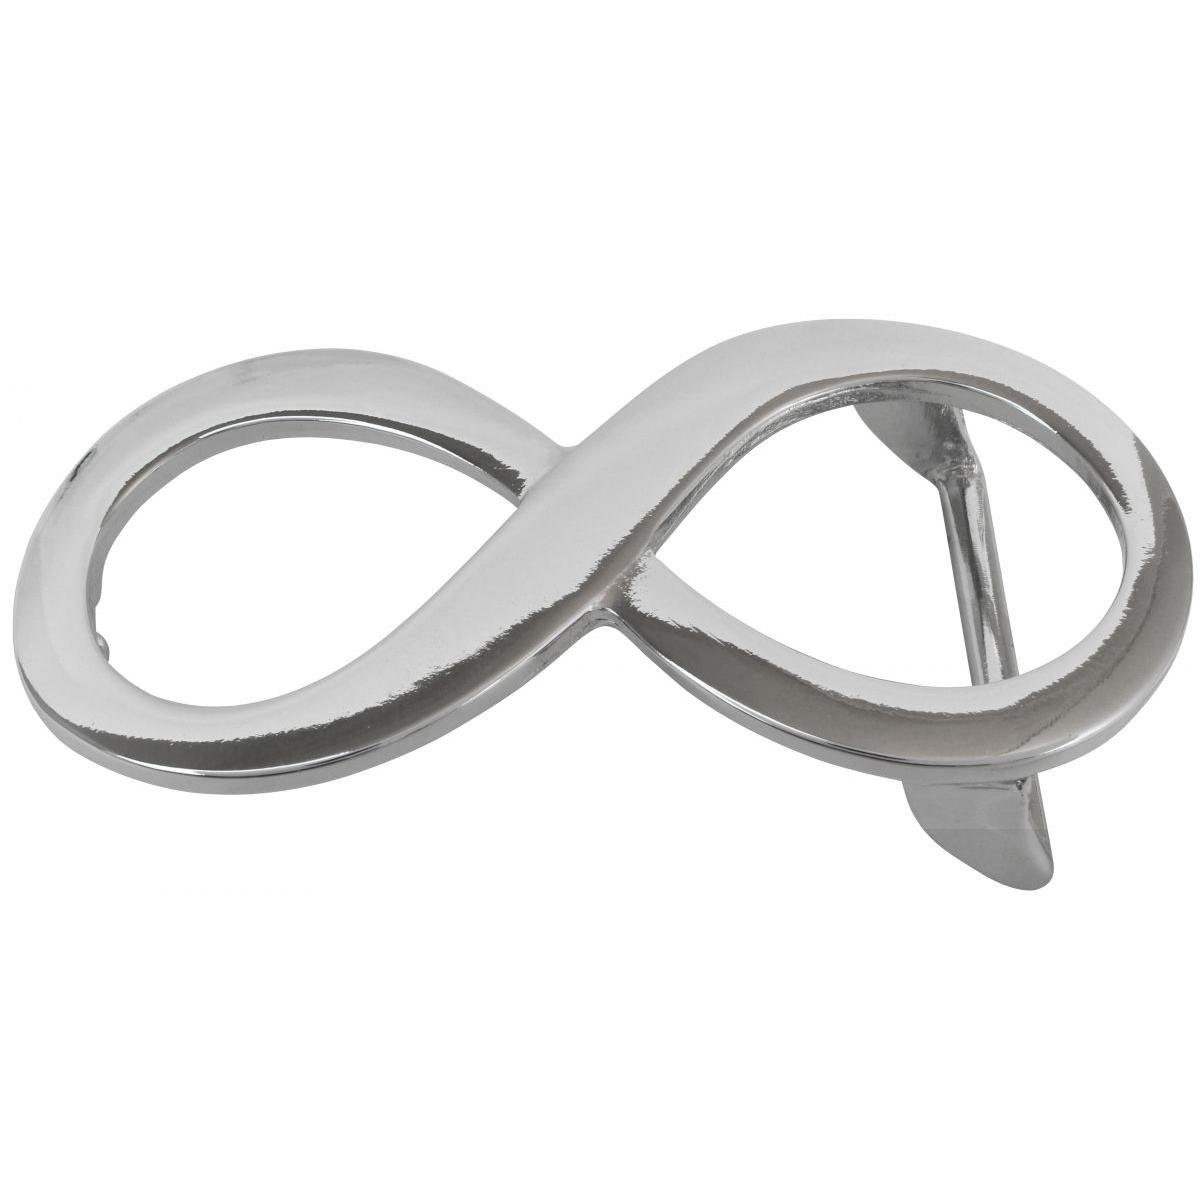 Gürtelschließe Silber Gürtel BELTINGER - Buckle cm 4,0 - glänzend Wechselschließe 40mm Infinity Gürtelschnalle